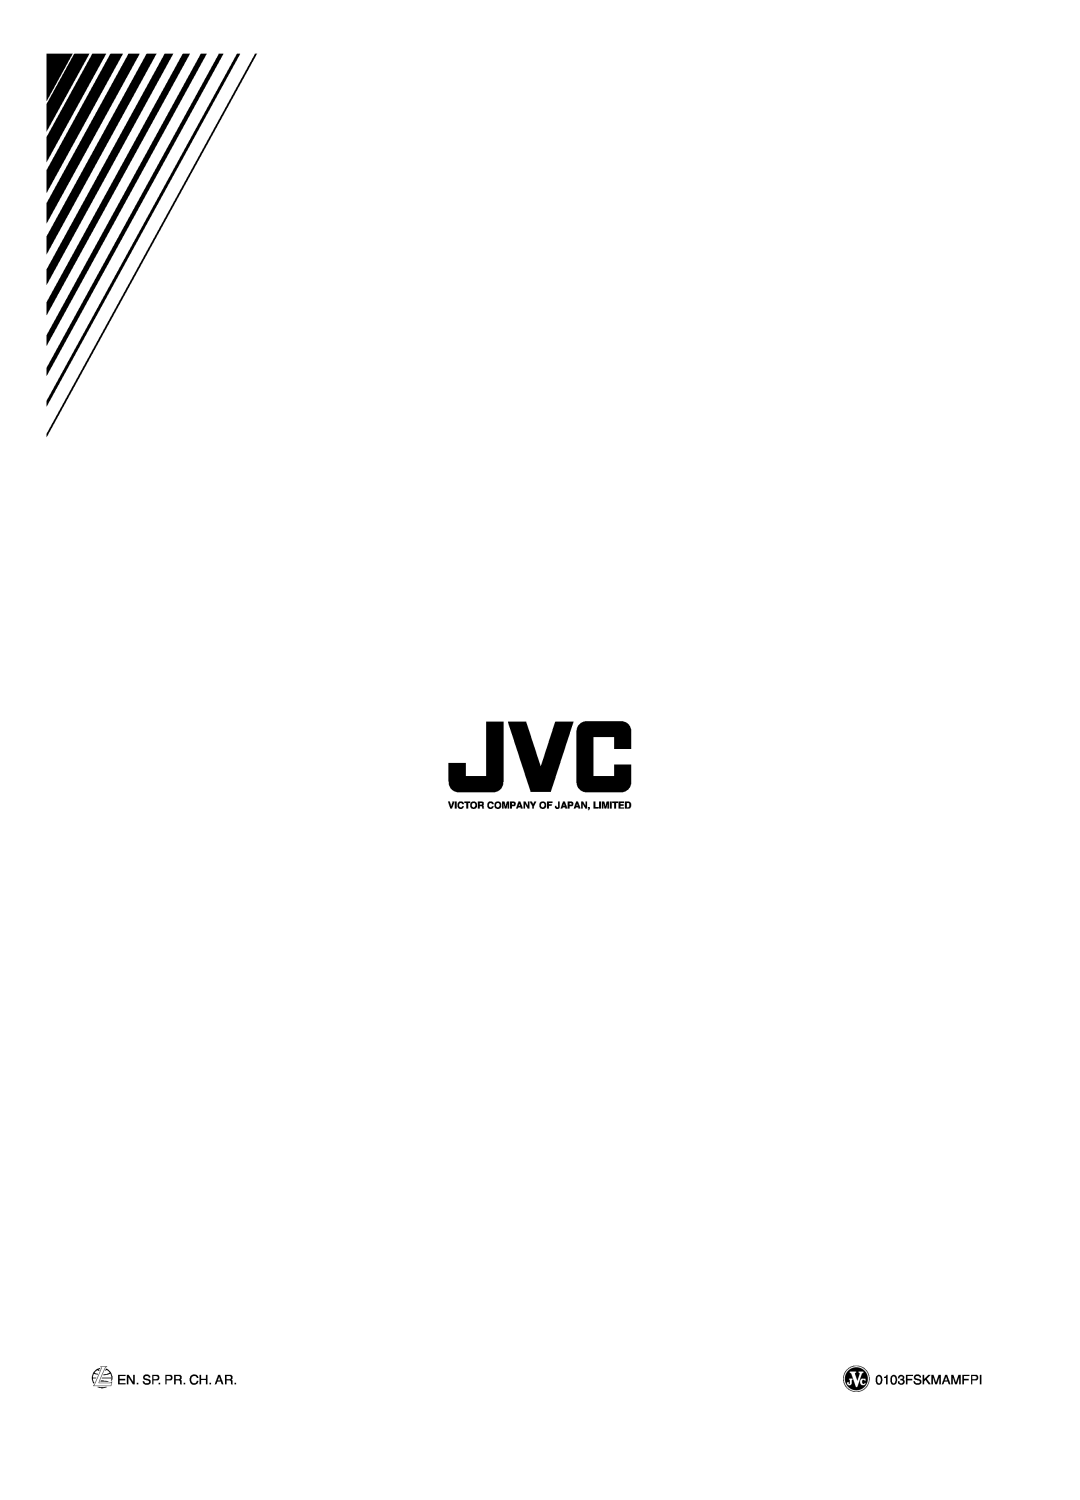 JVC CA-HXZ9V, CA-HXZ7V, CA-HXZ98V manual En. Sp. Pr. Ch. Ar, 0103FSKMAMFPI, Victor Company Of Japan, Limited 